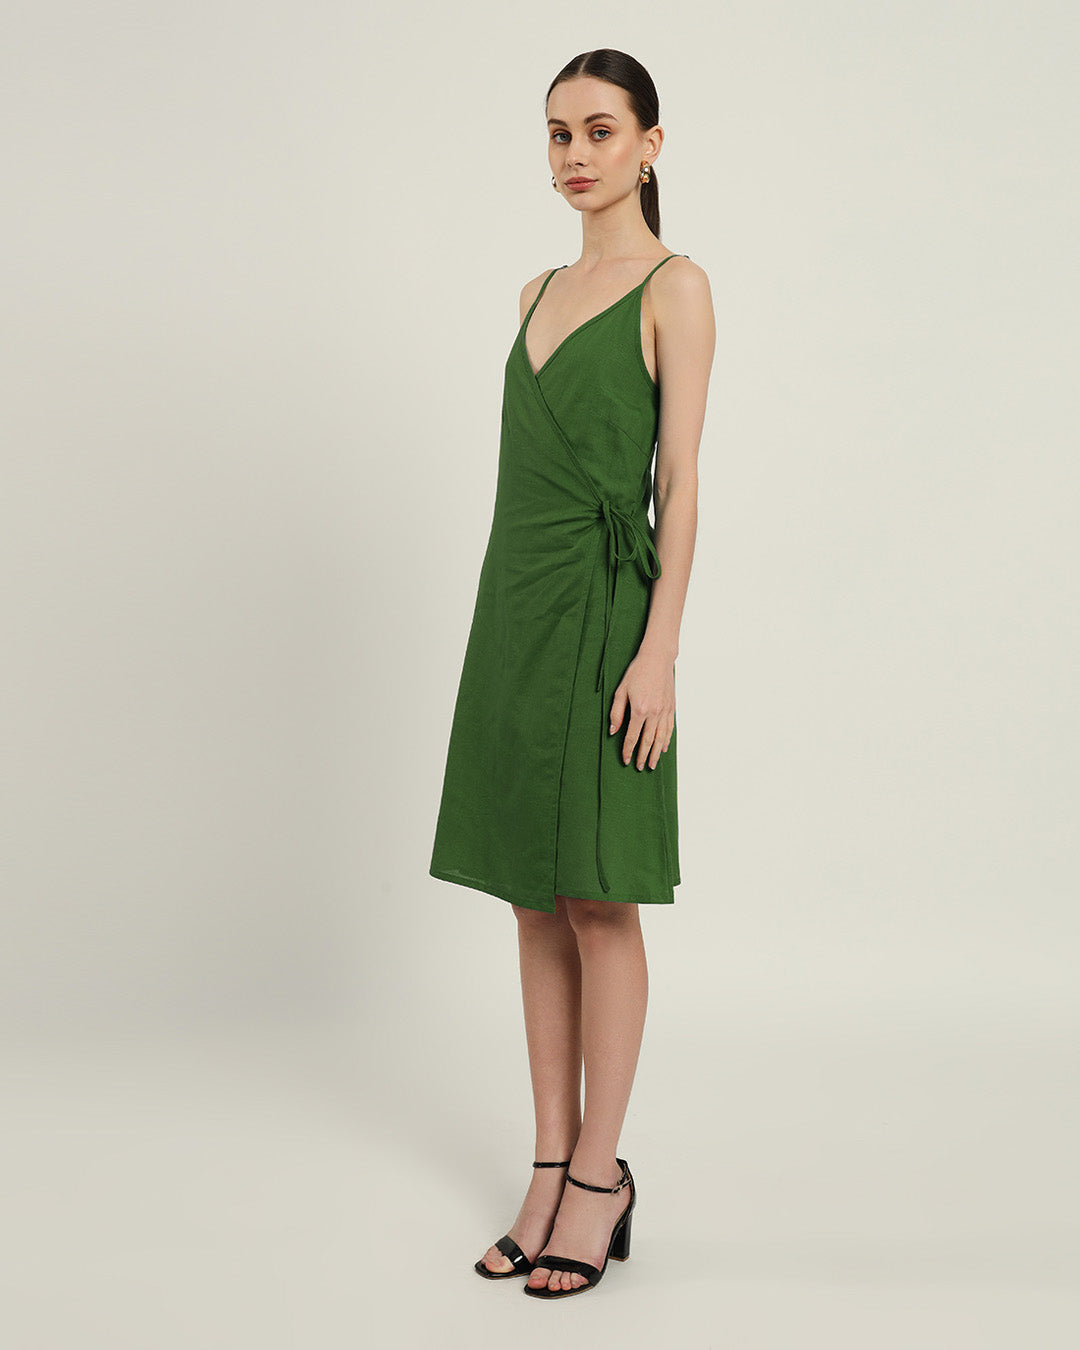 The Chambéry Emerald Dress